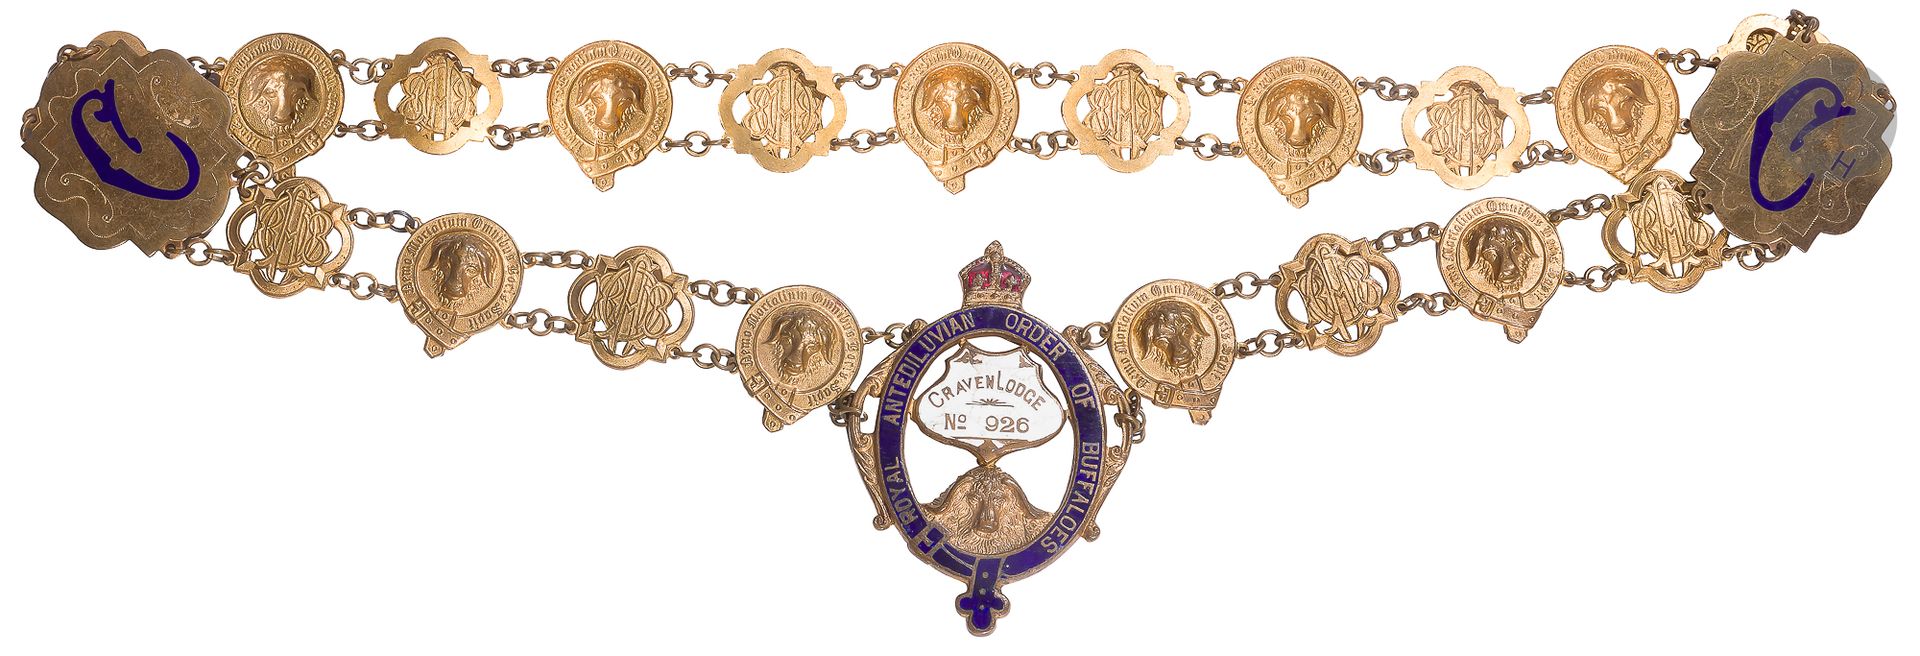 Null "Royal Antediluvian Order of Buffaloes "
大型兄弟会项链，装饰有印有水牛头的铜质奖章，与编号为 "RAOB "&hellip;